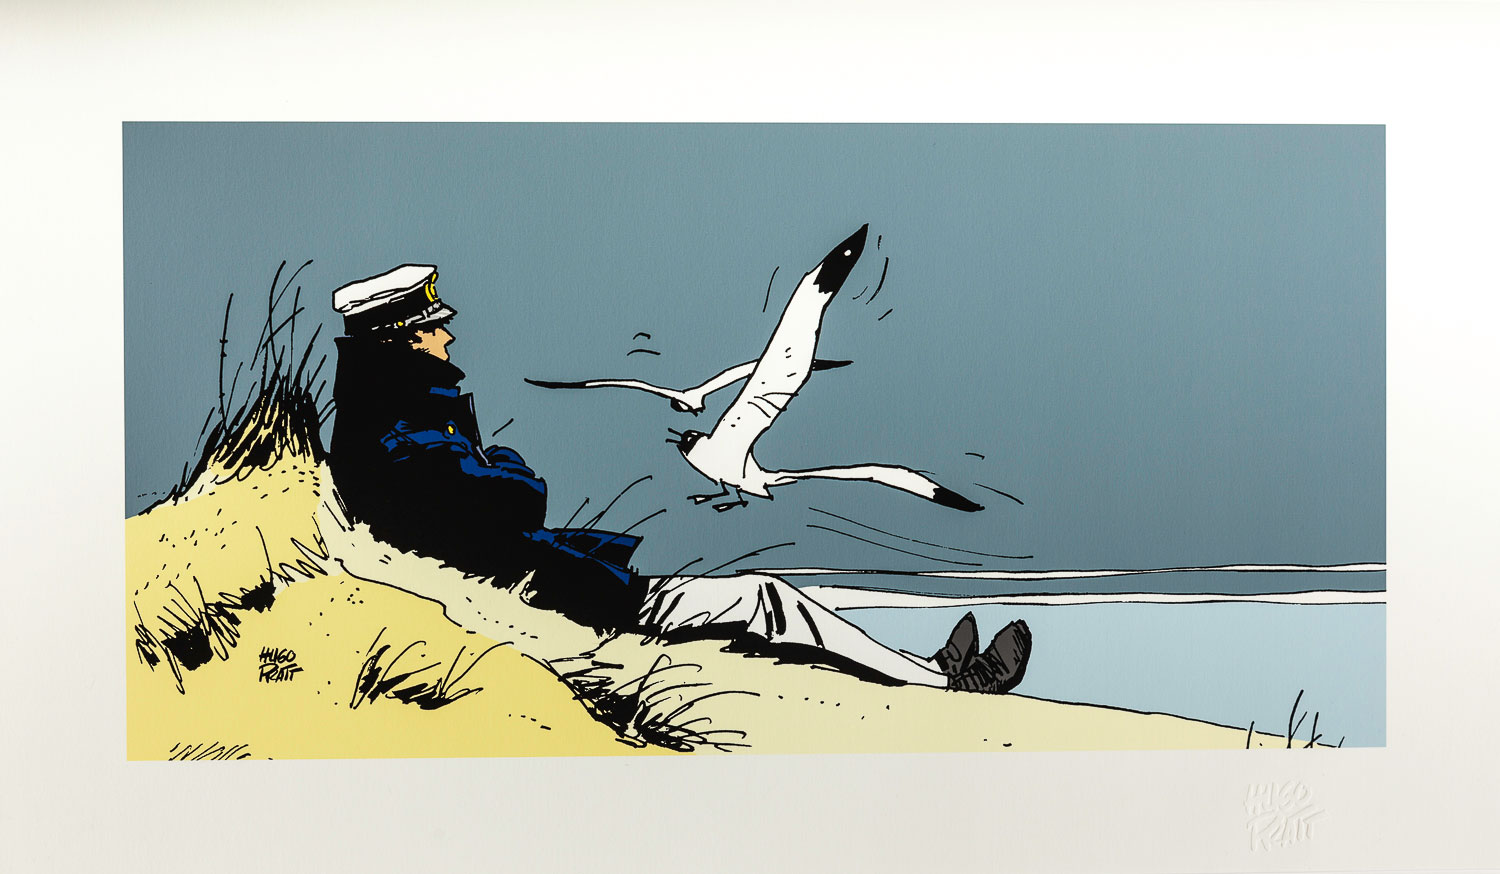 Stampa pigmentaria Hugo Pratt : Corto, marinaio sulla duna - Stampa 60 x 35 cm